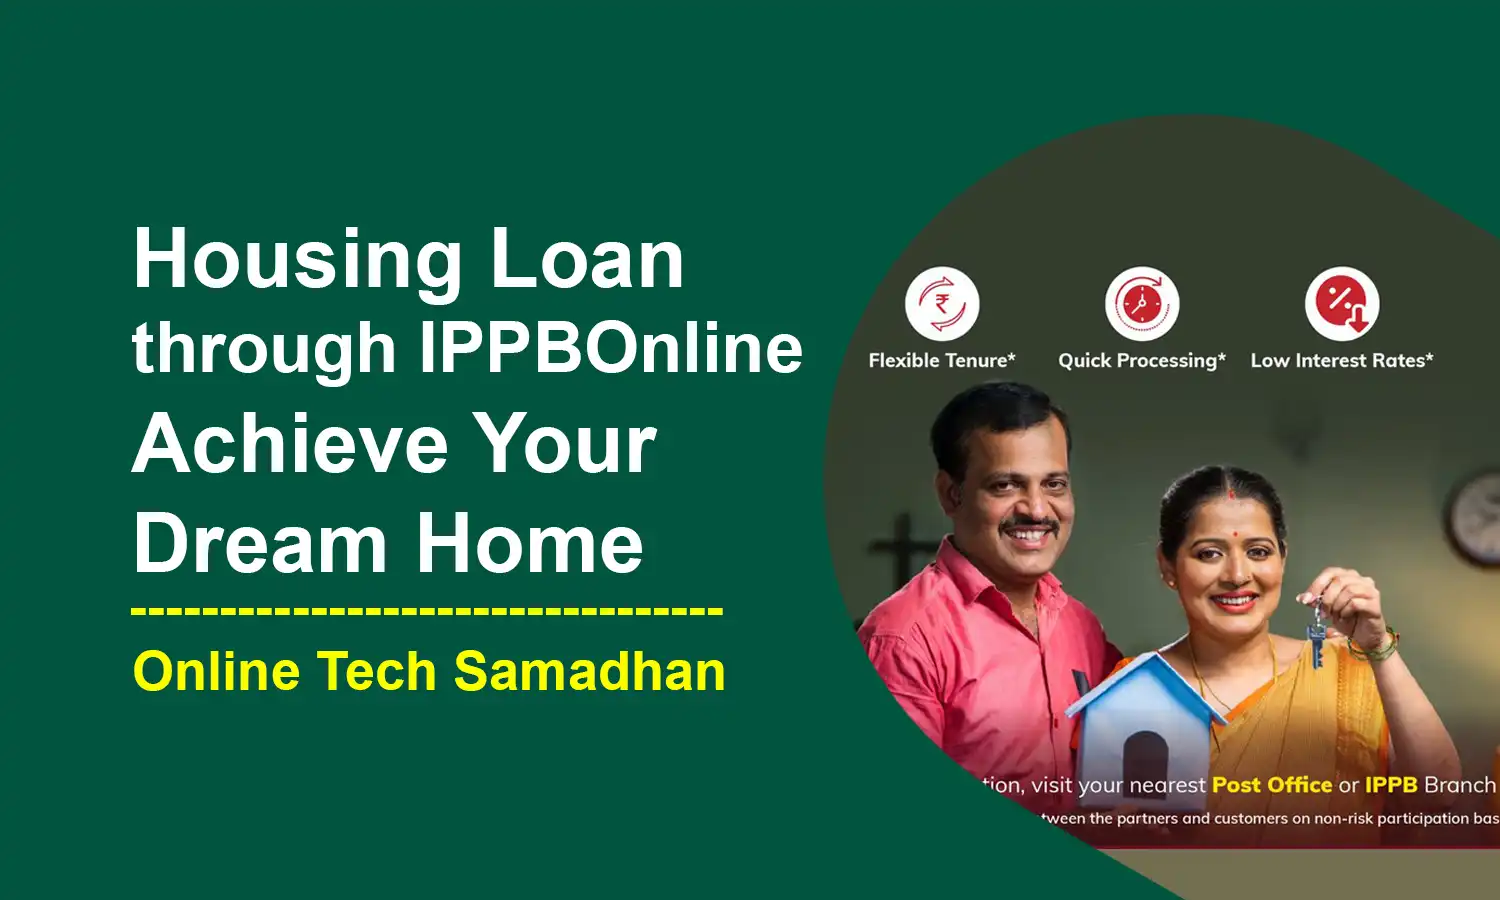 Housing Loan through IPPBOnline